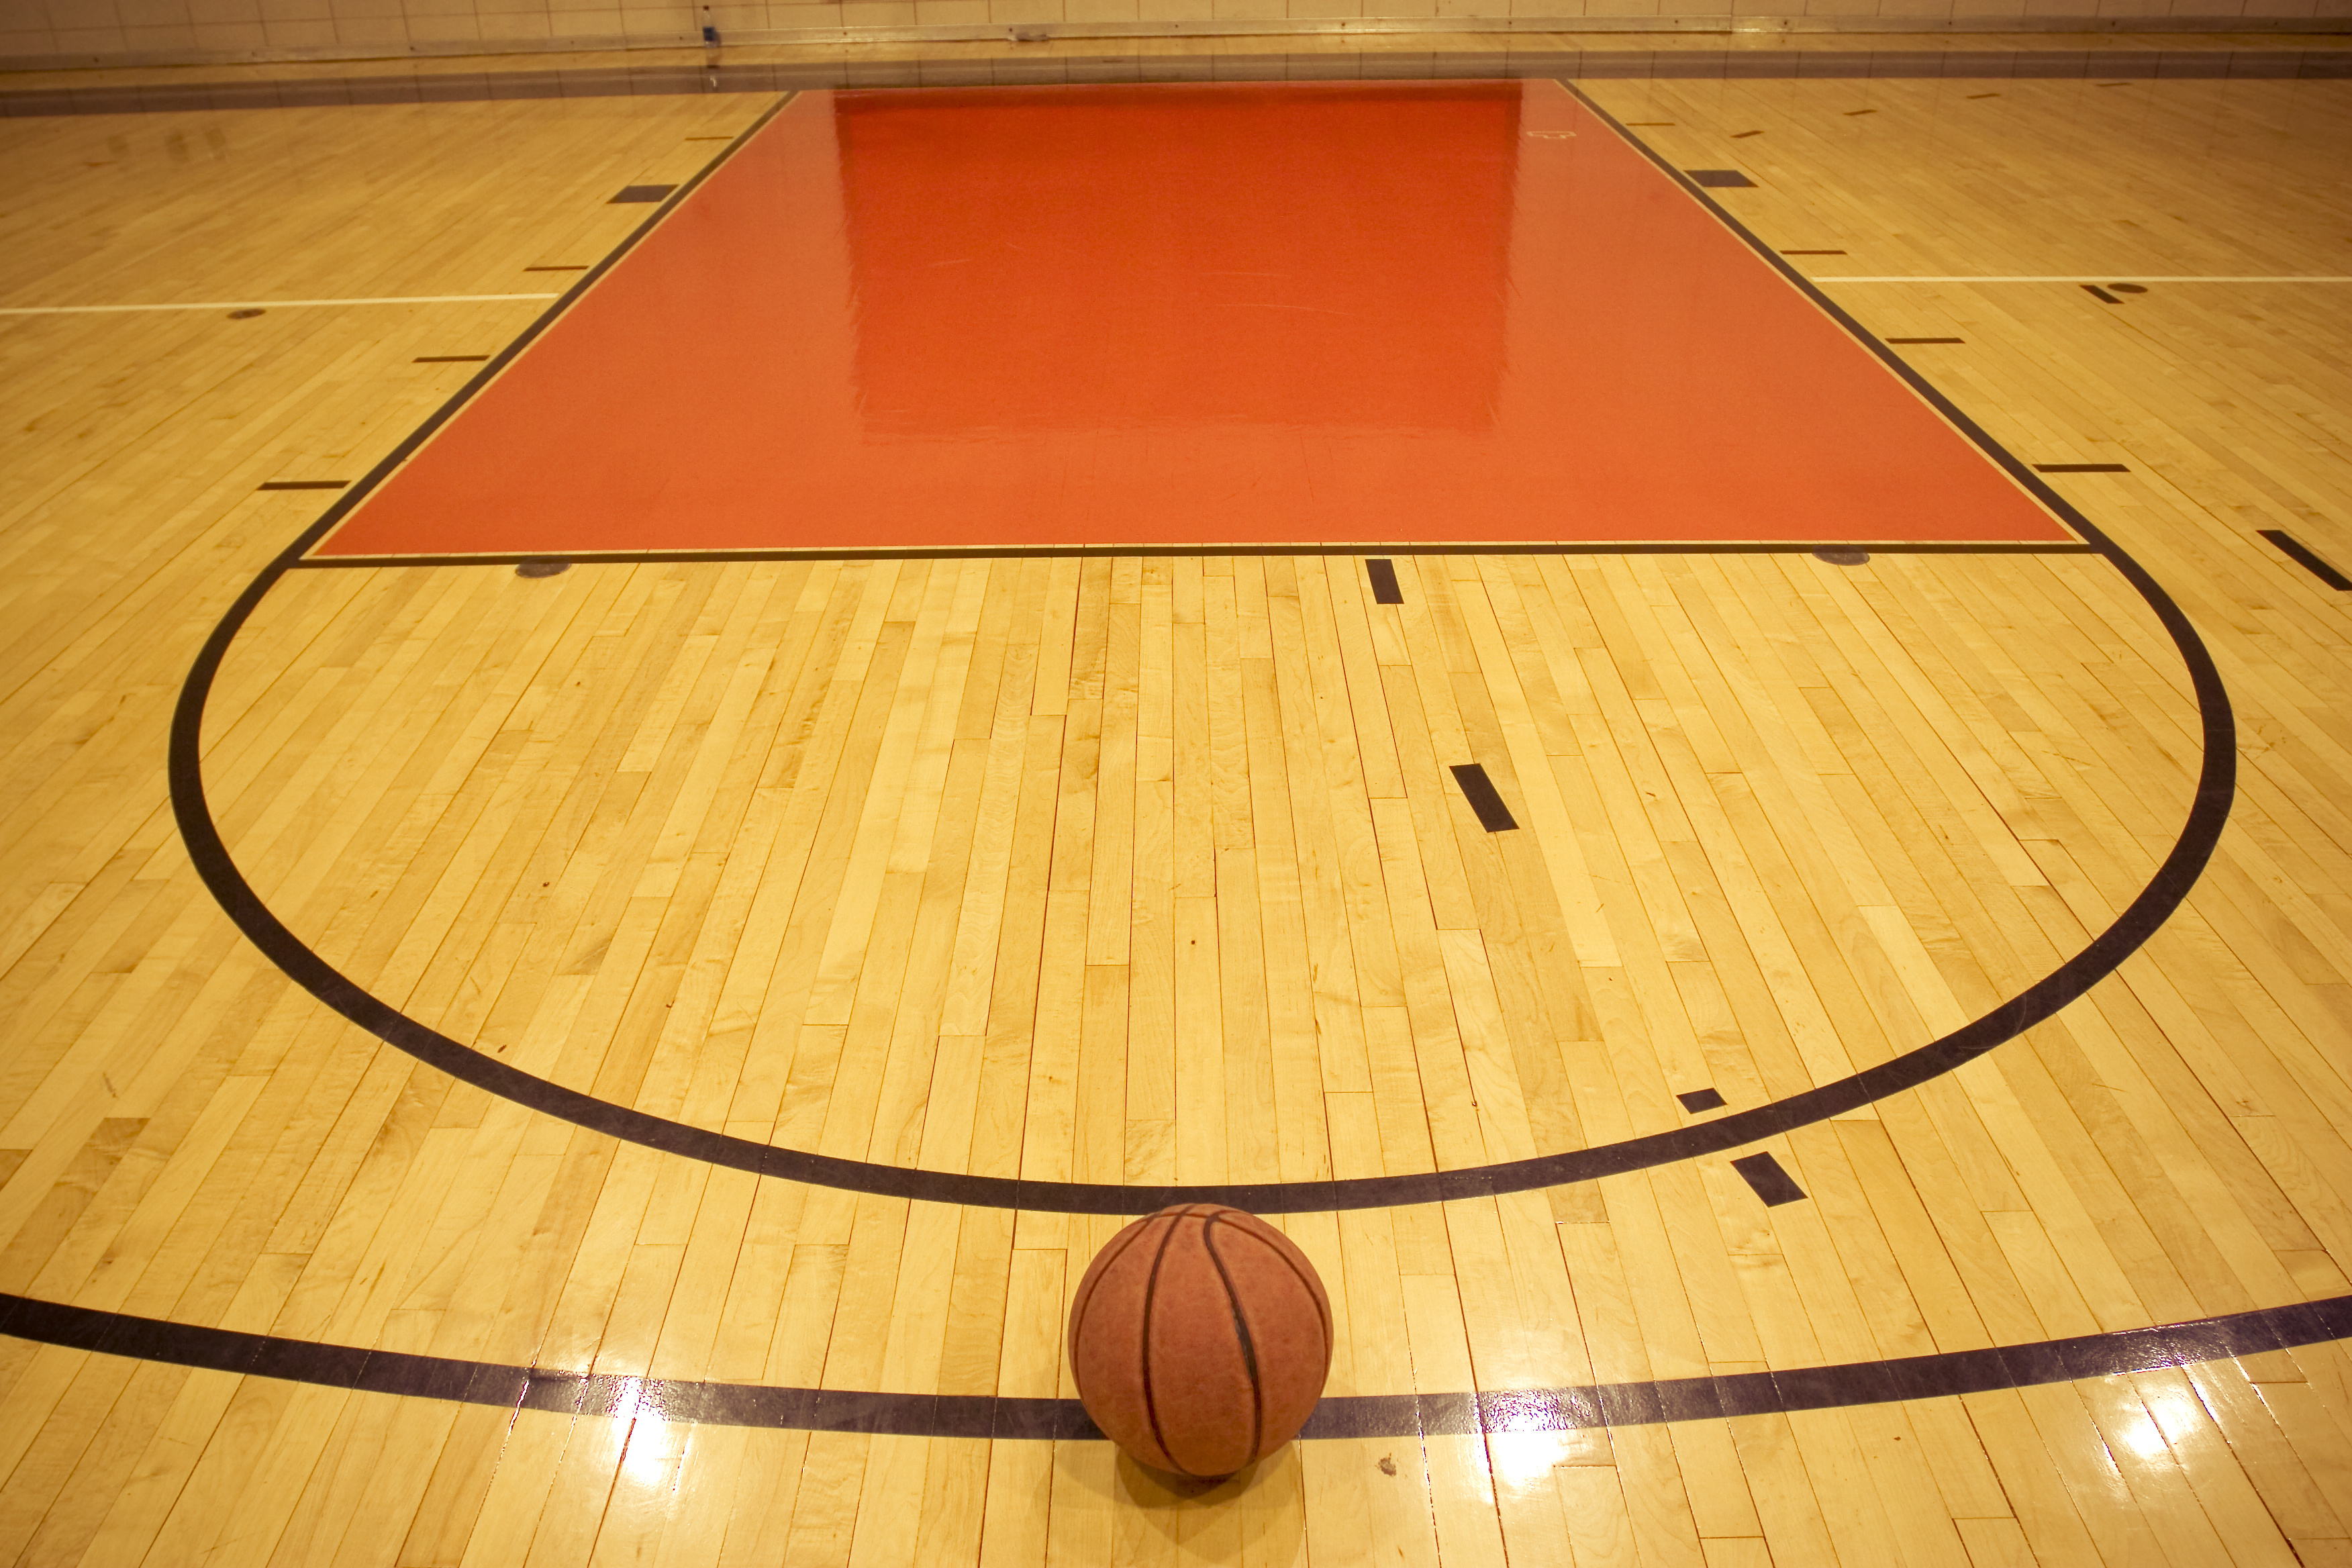 Slam Dunk Polyurethane Is On The Court, Basketball Hardwood Floor